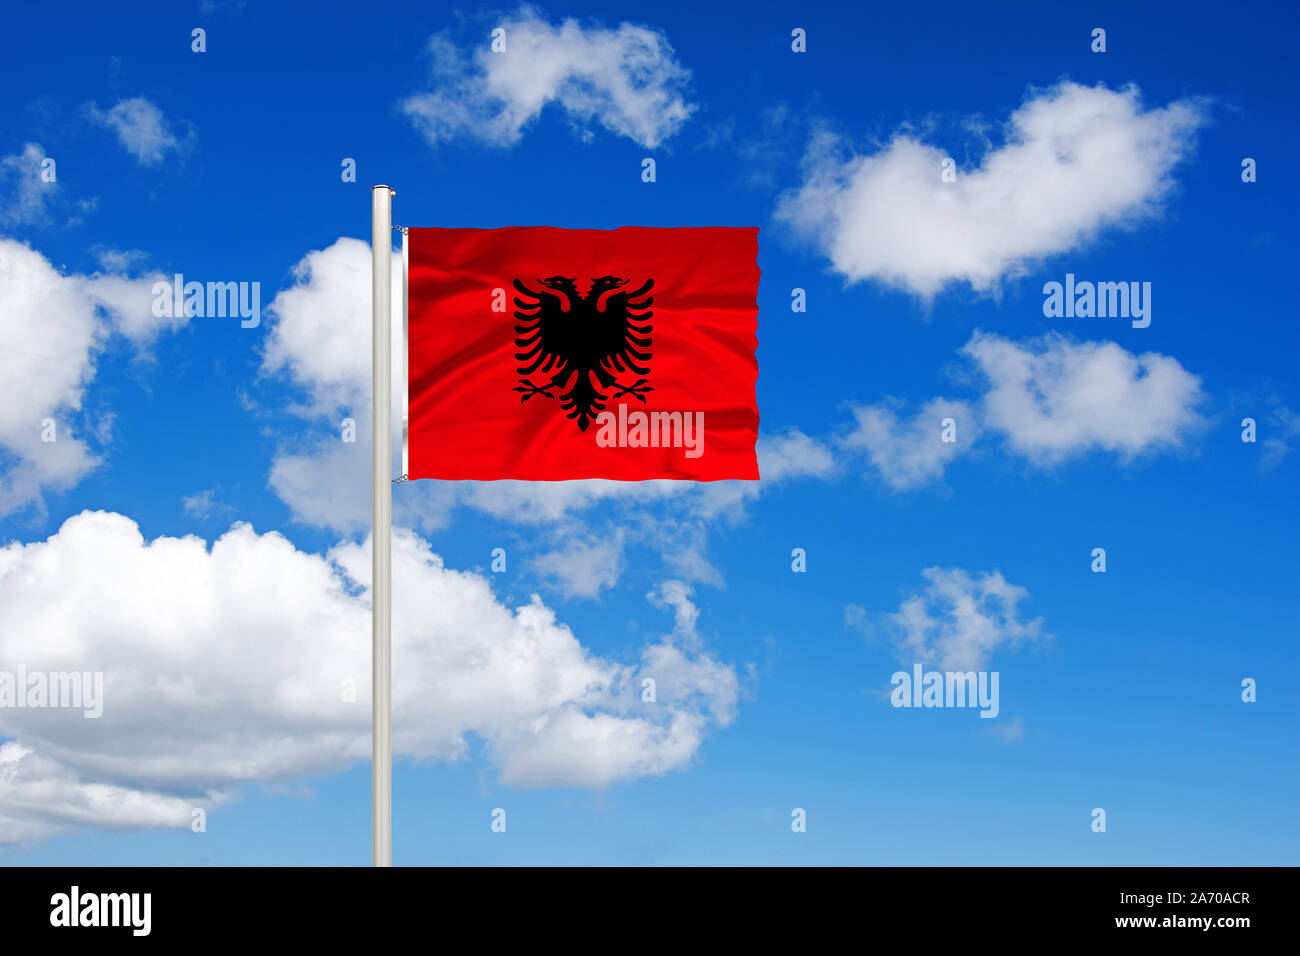 Balkan, Albanien, Flagge, Nationalflagge, Fahne, Nationalfahne, Cumulus Wolken vor blauen Himmel, Stock Photo